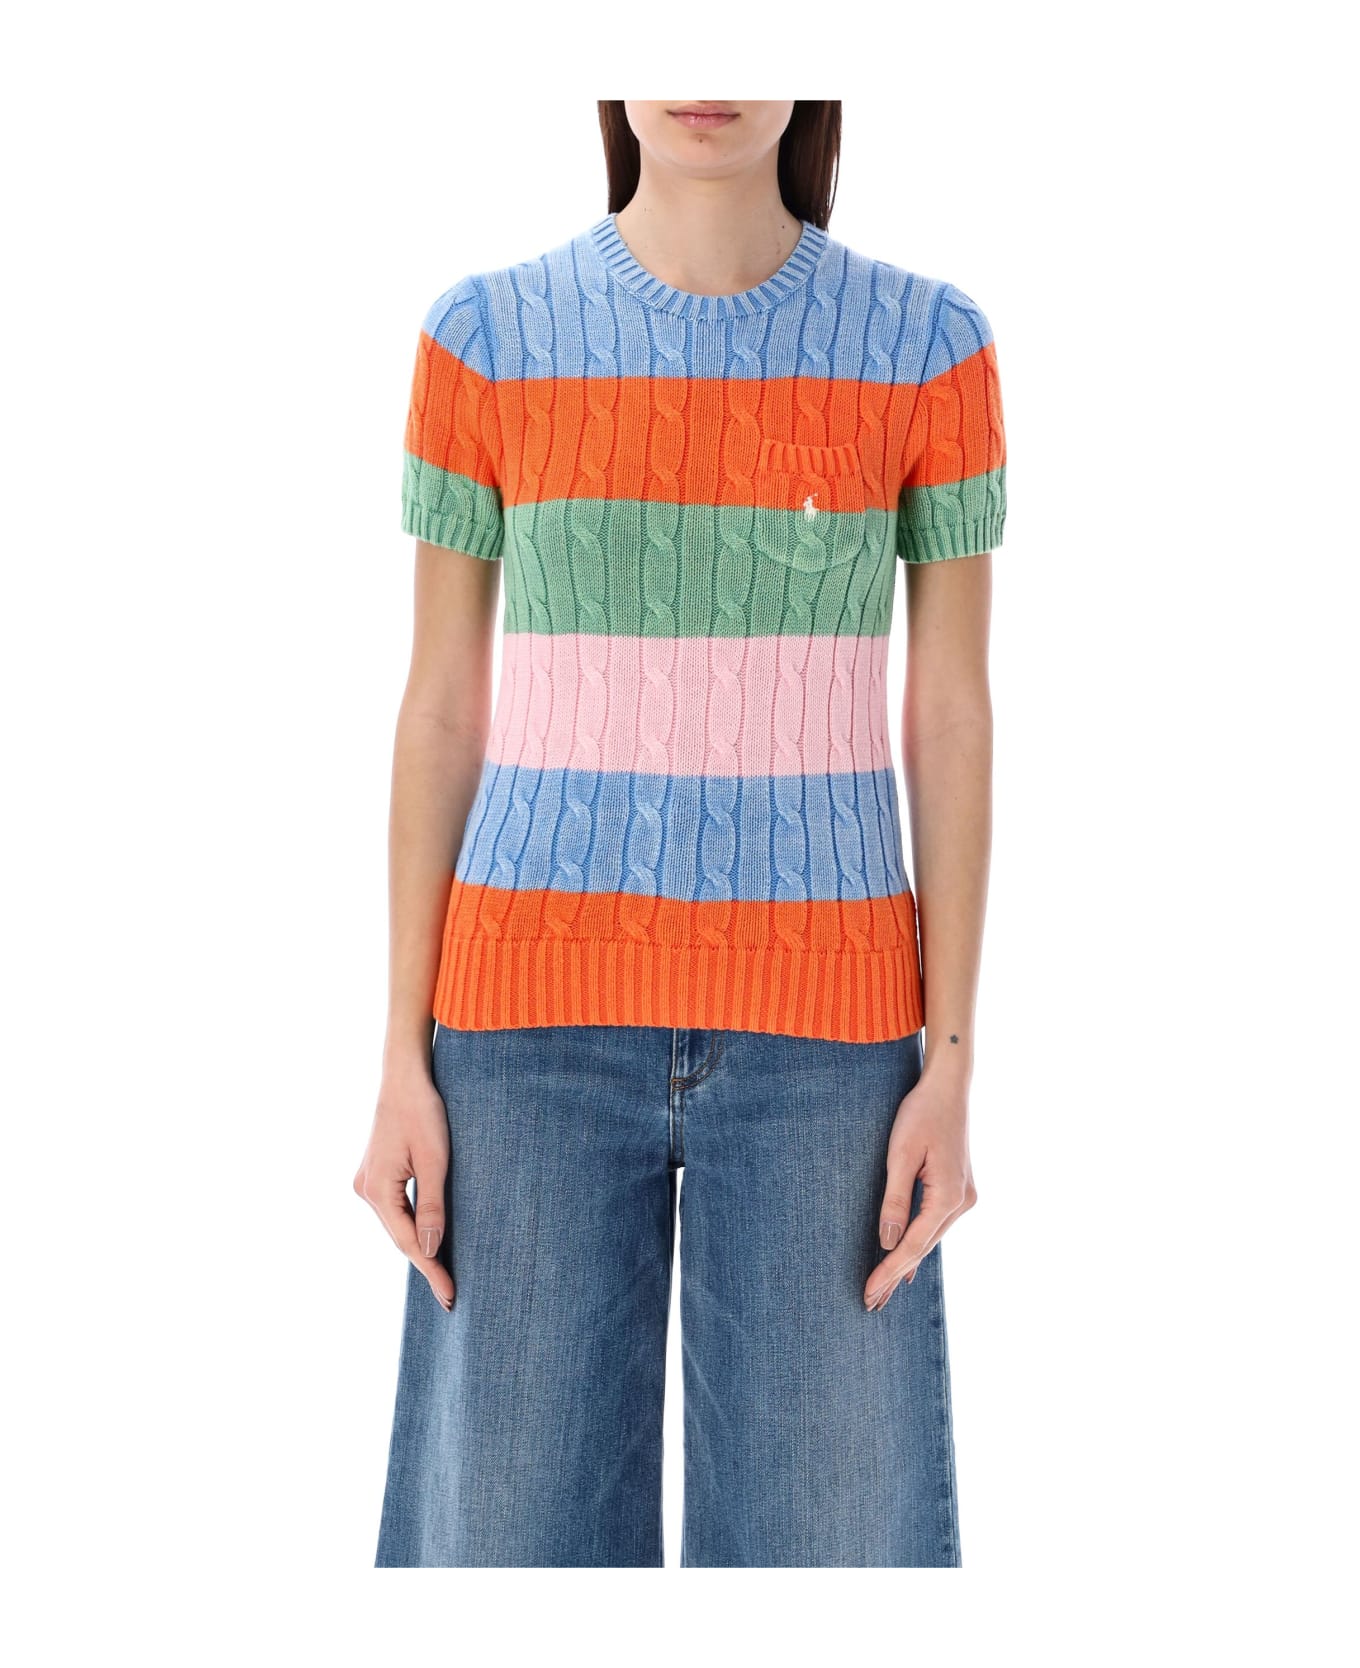 Polo Ralph Lauren Stripe Short Sleeves Sweater - STRIPE MULTICOLOR